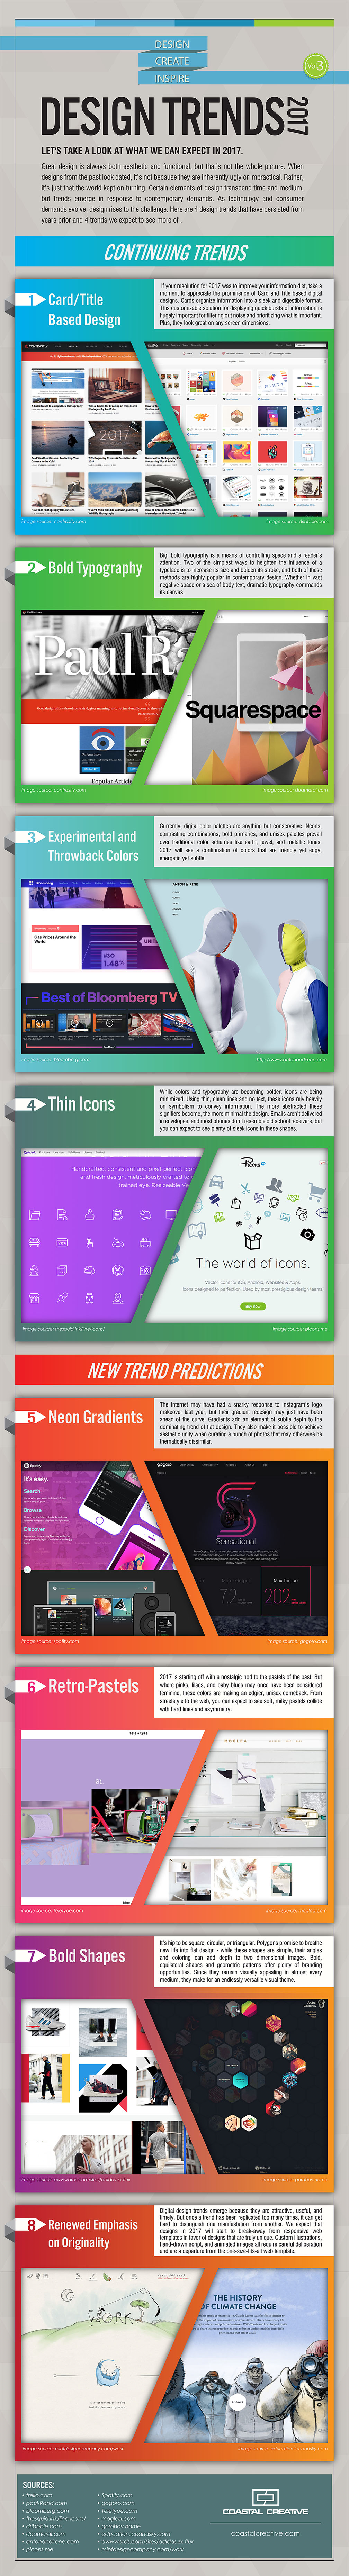 web design trends 2017 infographic